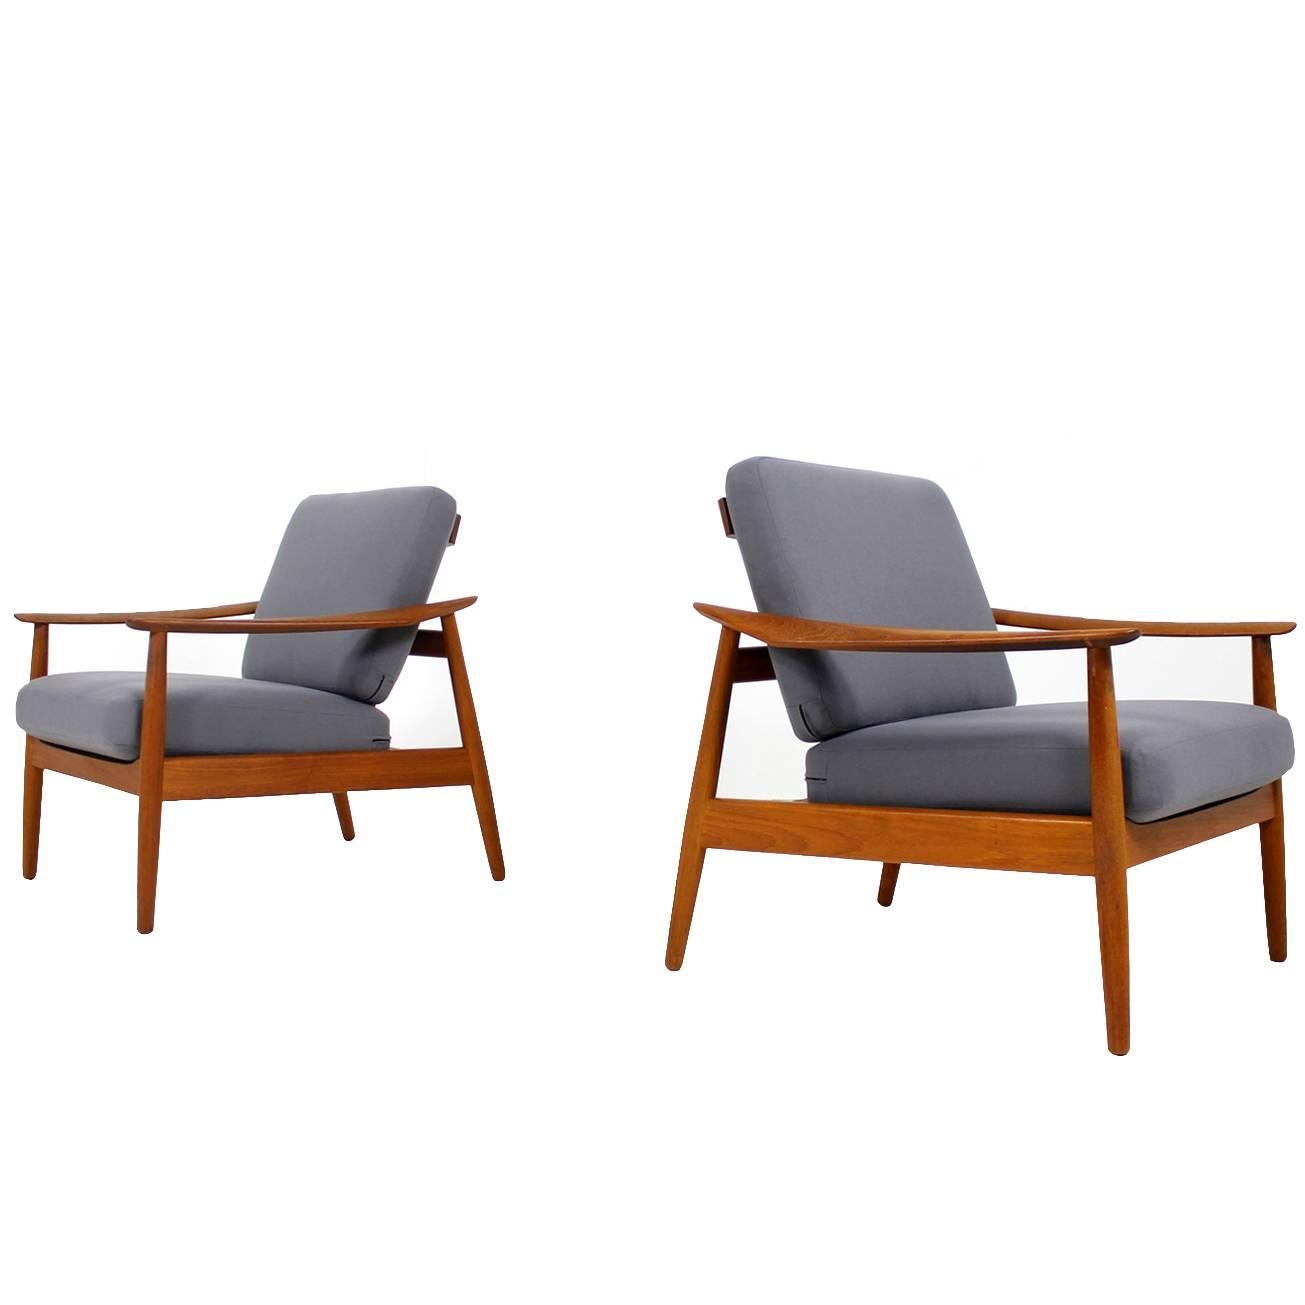 Beautiful Pair of 1960s Arne Vodder Teak Easy Chairs Mod. 164, Danish Modern